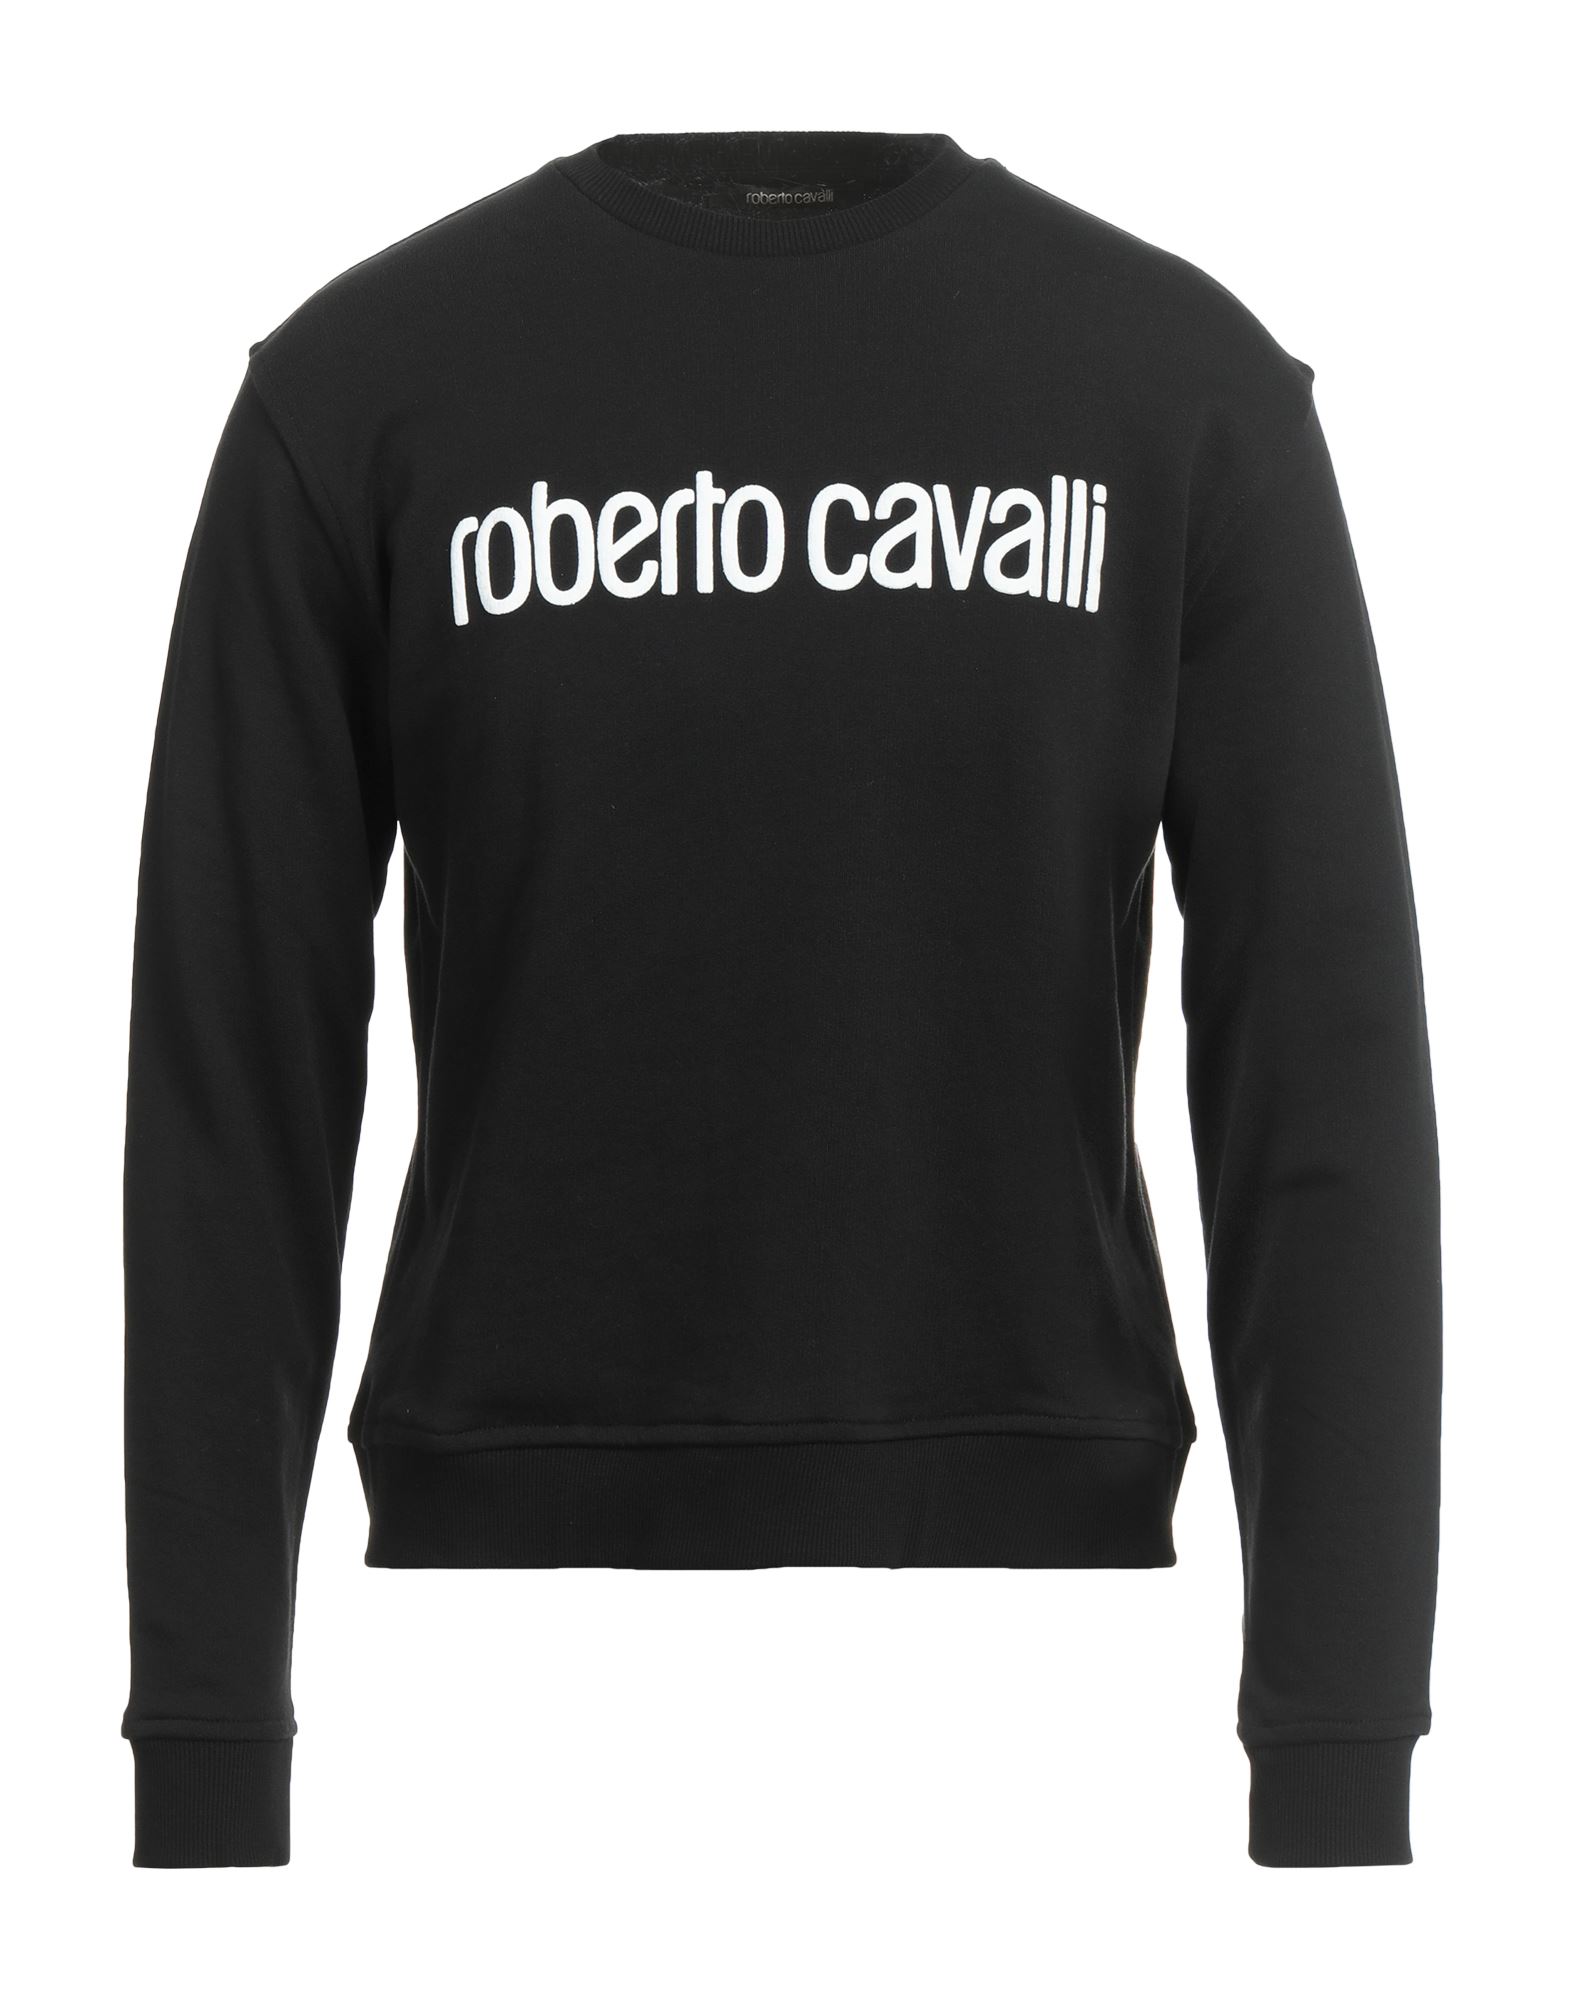 ROBERTO CAVALLI Sweatshirt Herren Schwarz von ROBERTO CAVALLI